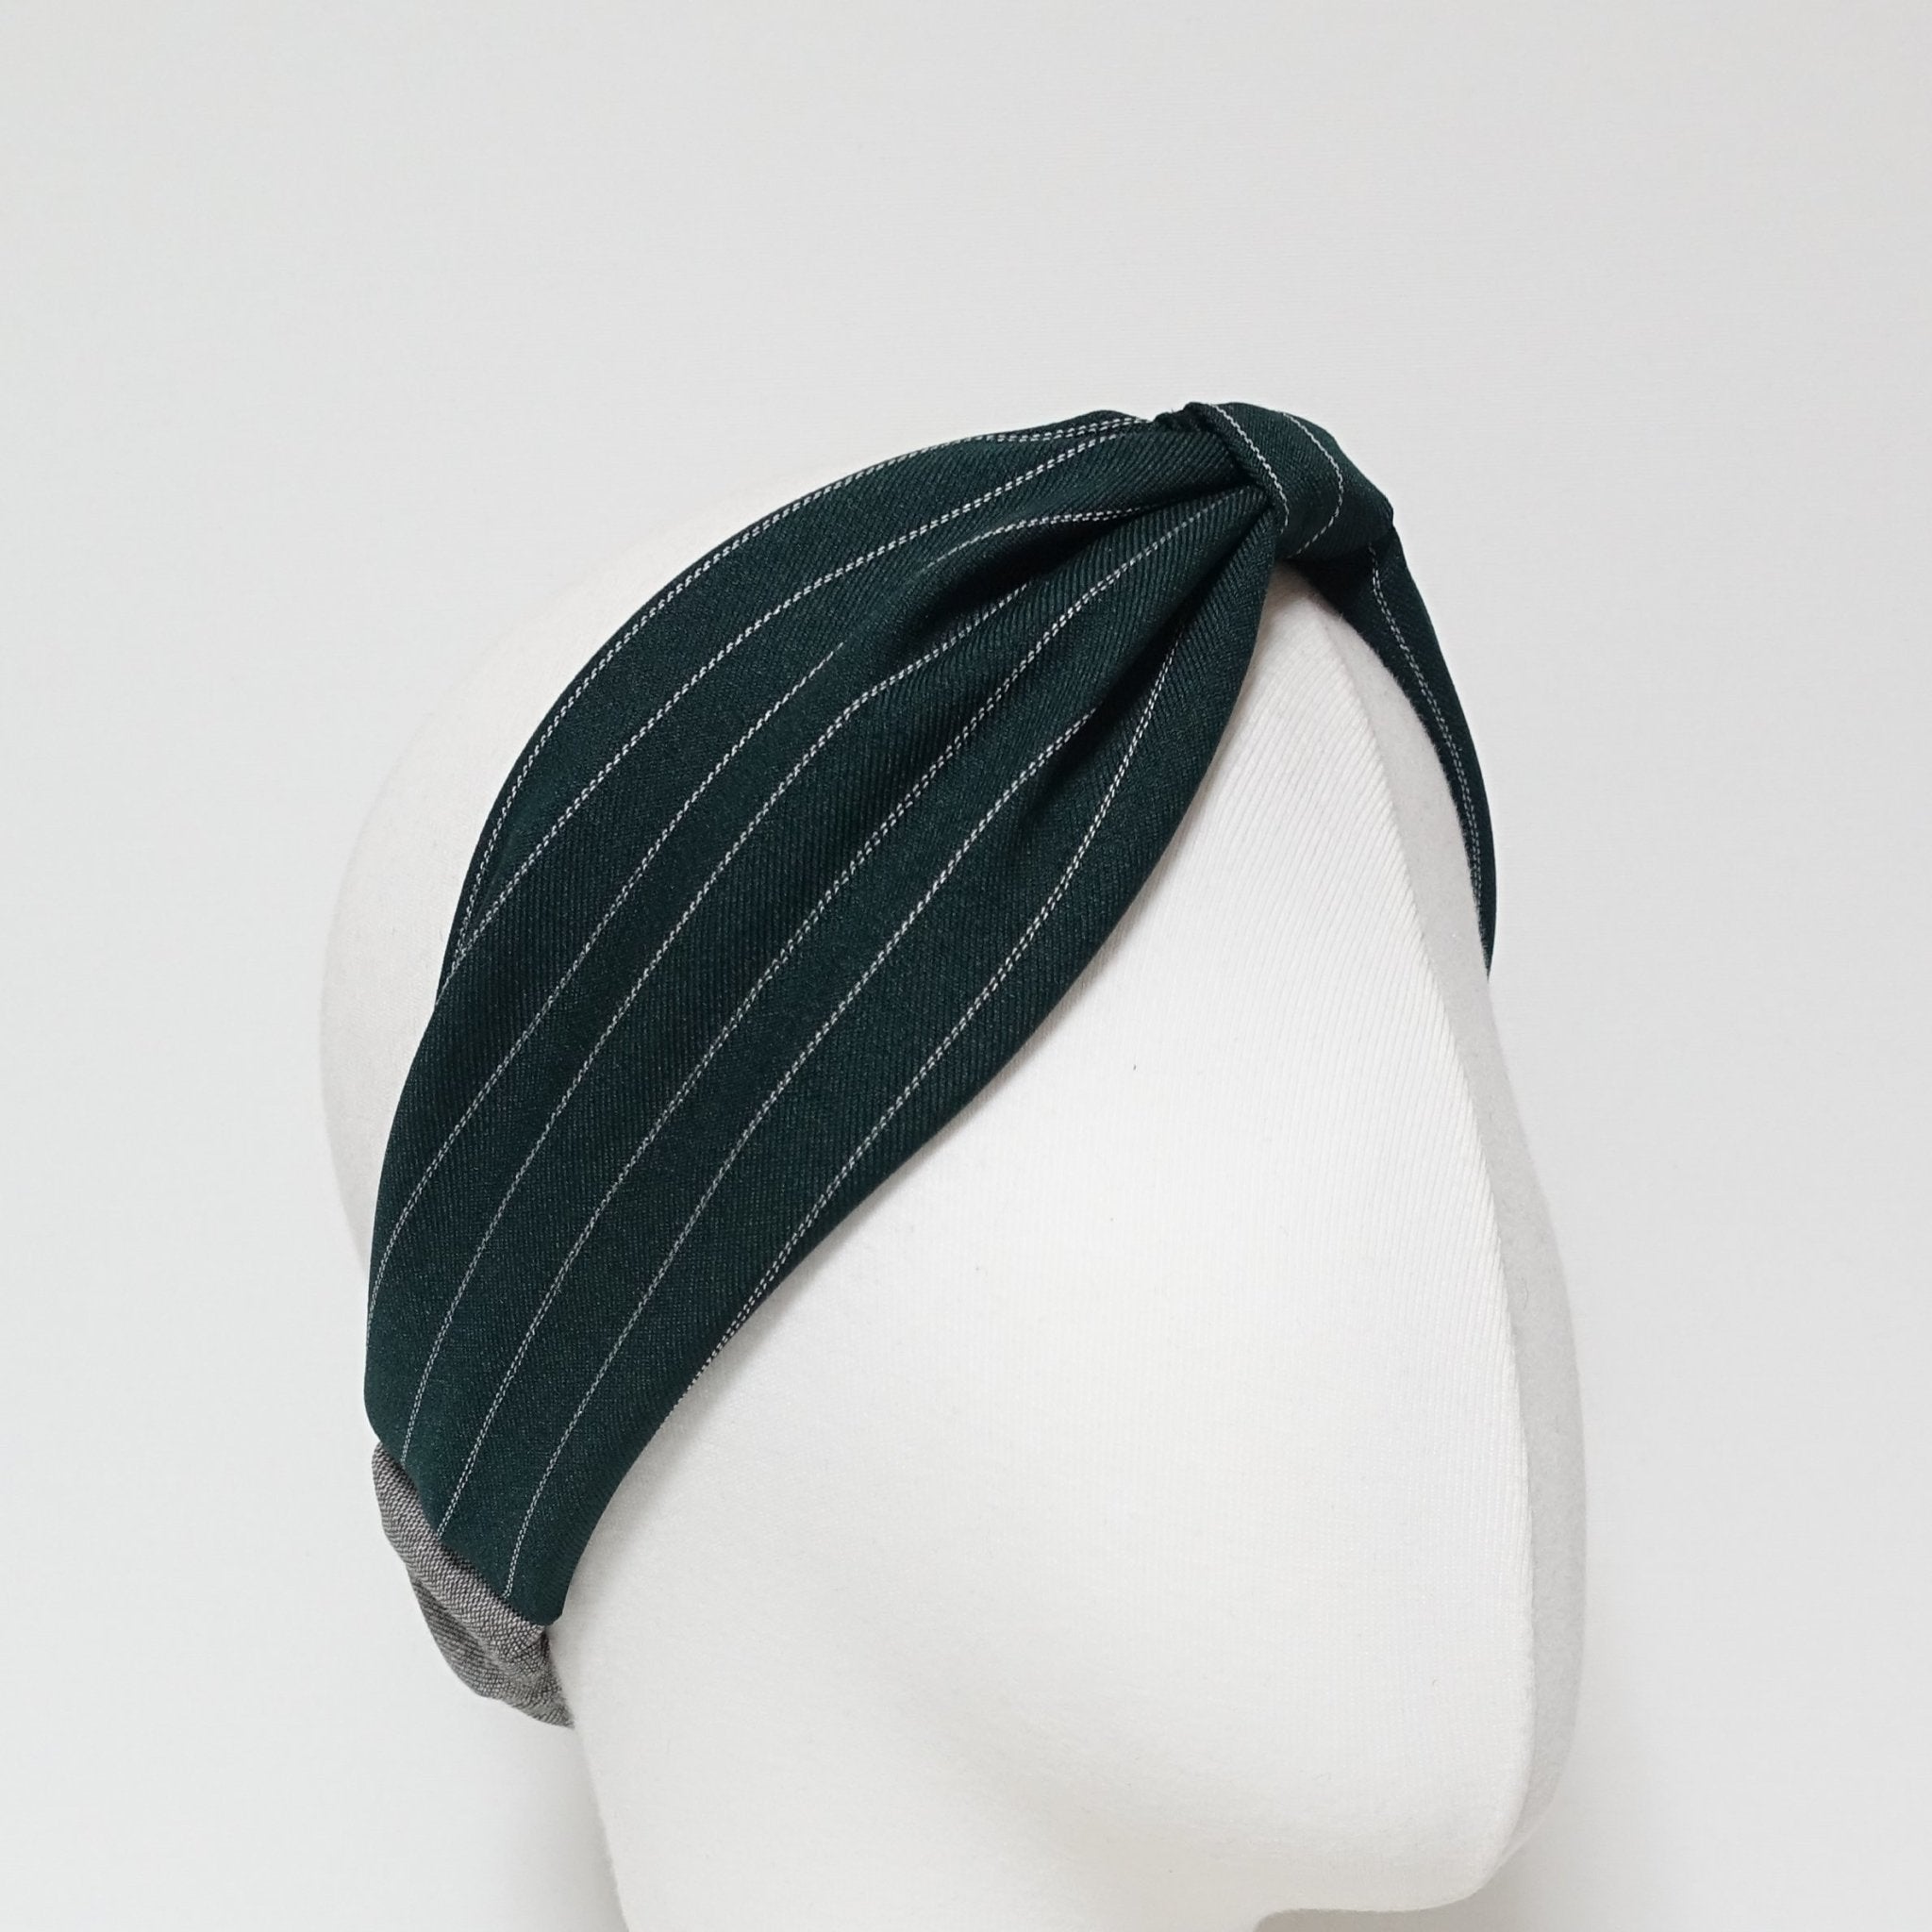 veryshine.com hairband/headband Green stripe pattern fashion headband suit style fabric headwrap women hair accessory